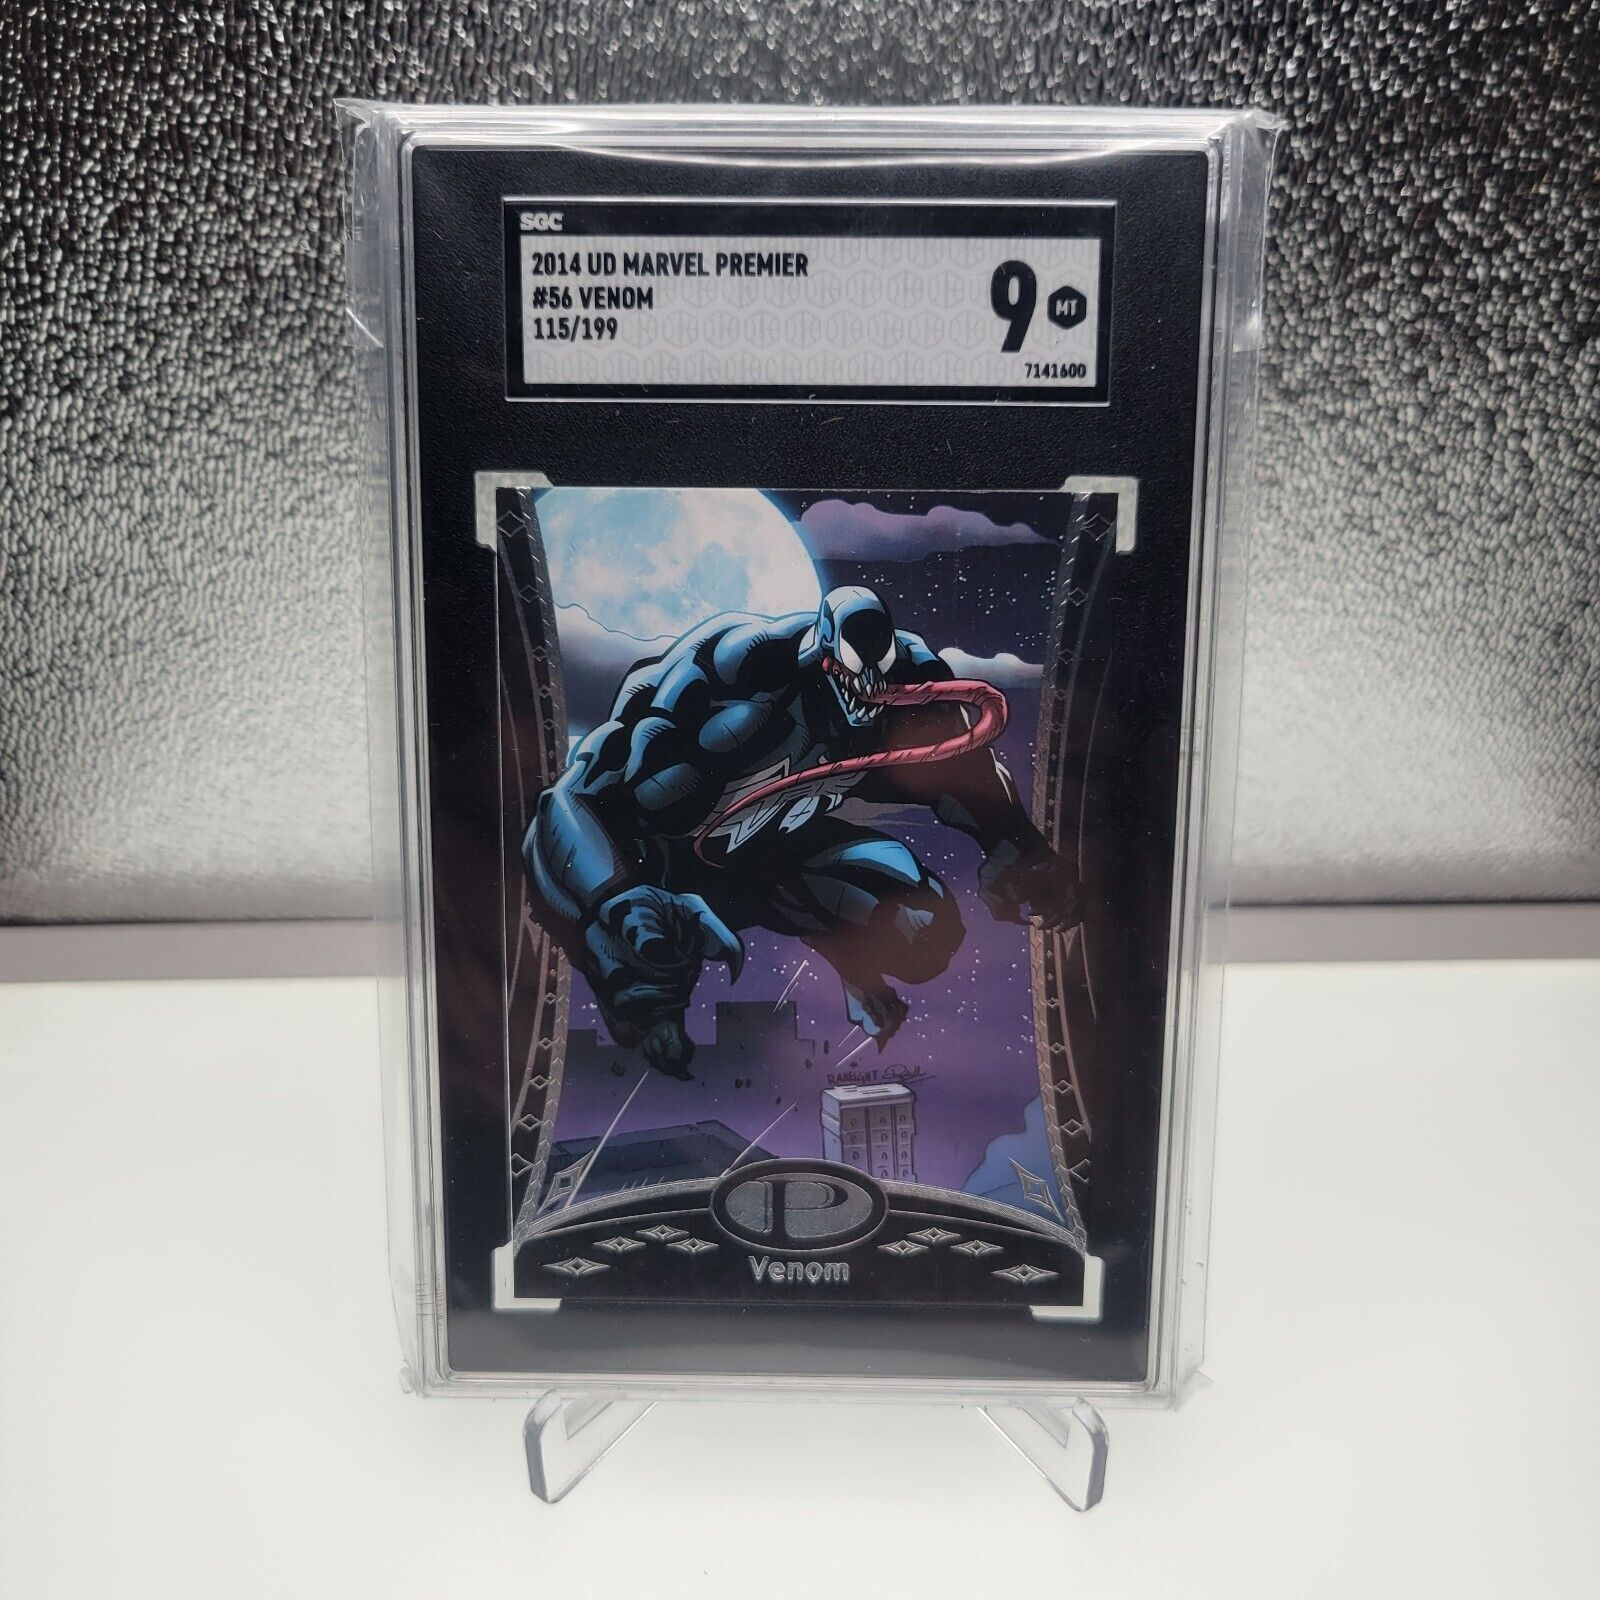 2014 UD Marvel Premier Venom #56 SGC 9 115/199 Rare Card